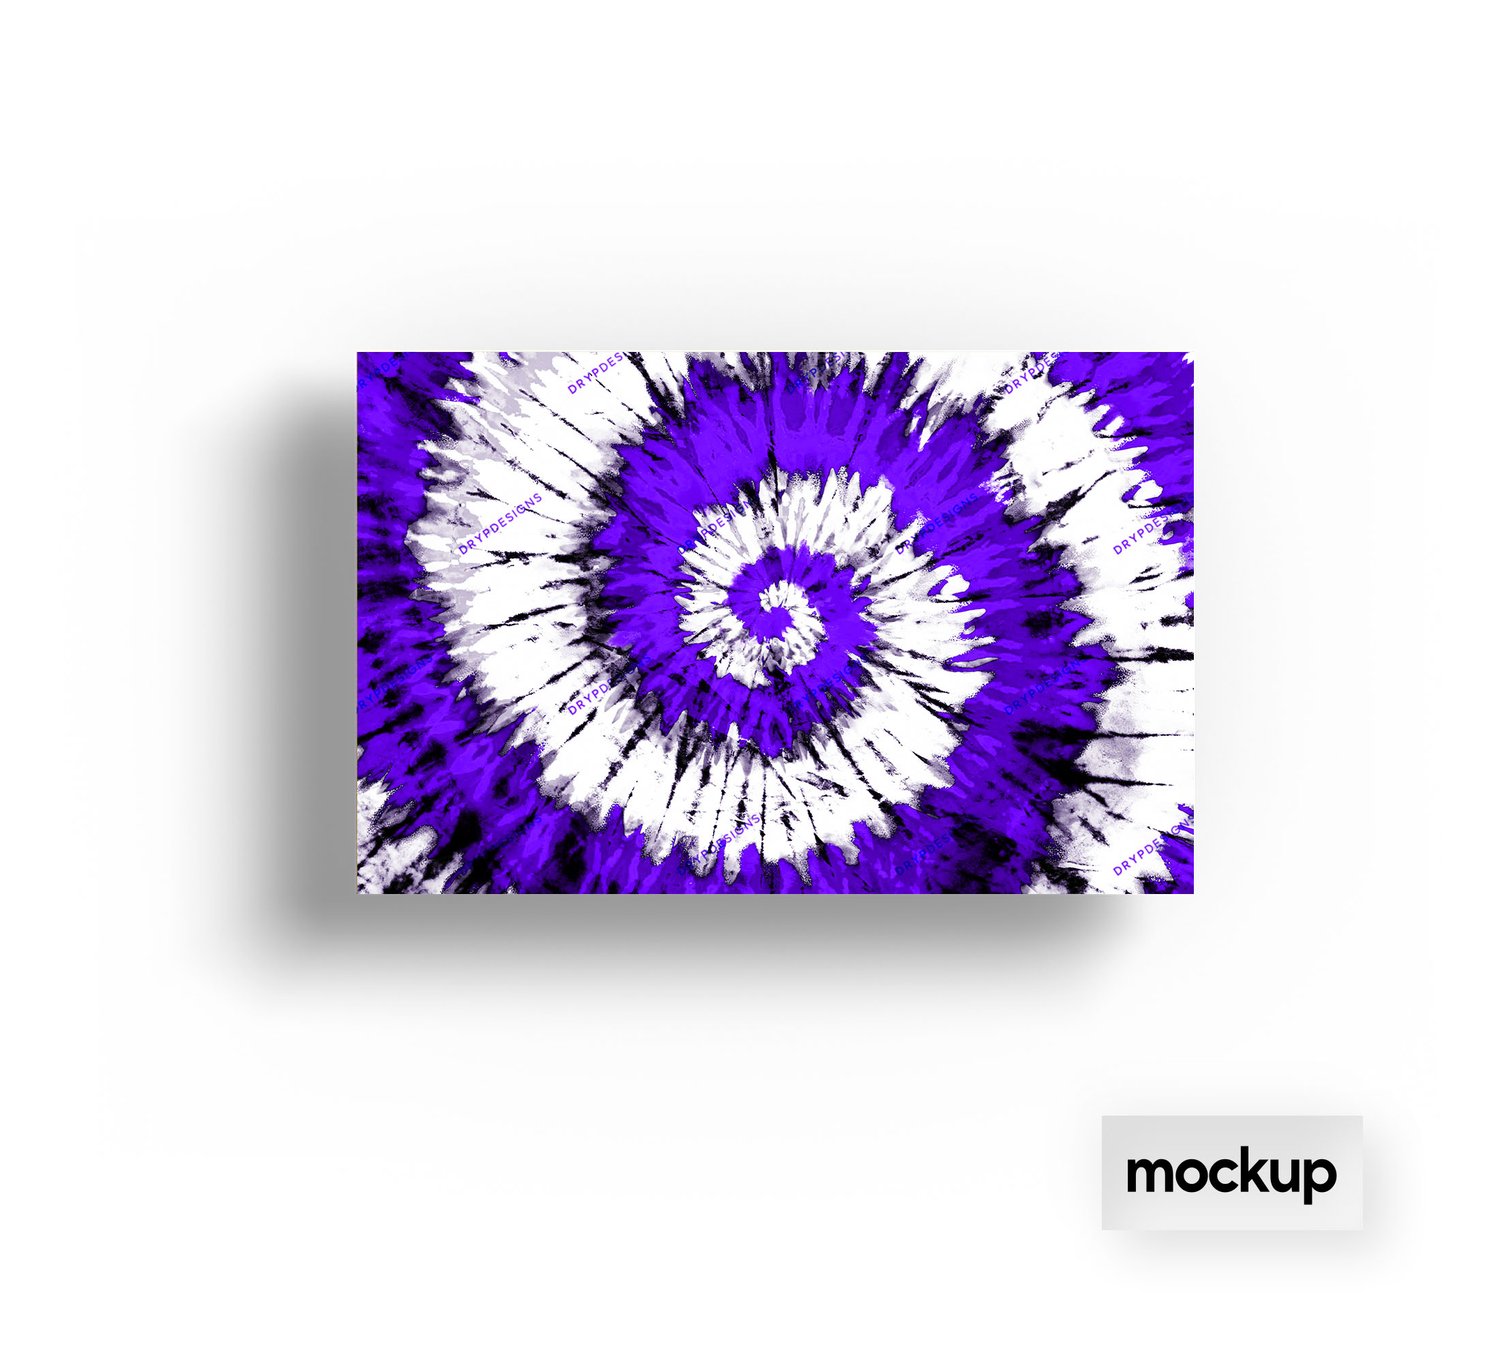 Black Purple Tiedye Swirl Digital Paper Background Texture Tiedy Wallpaper  PNG Instant Digital Download Files -  Canada